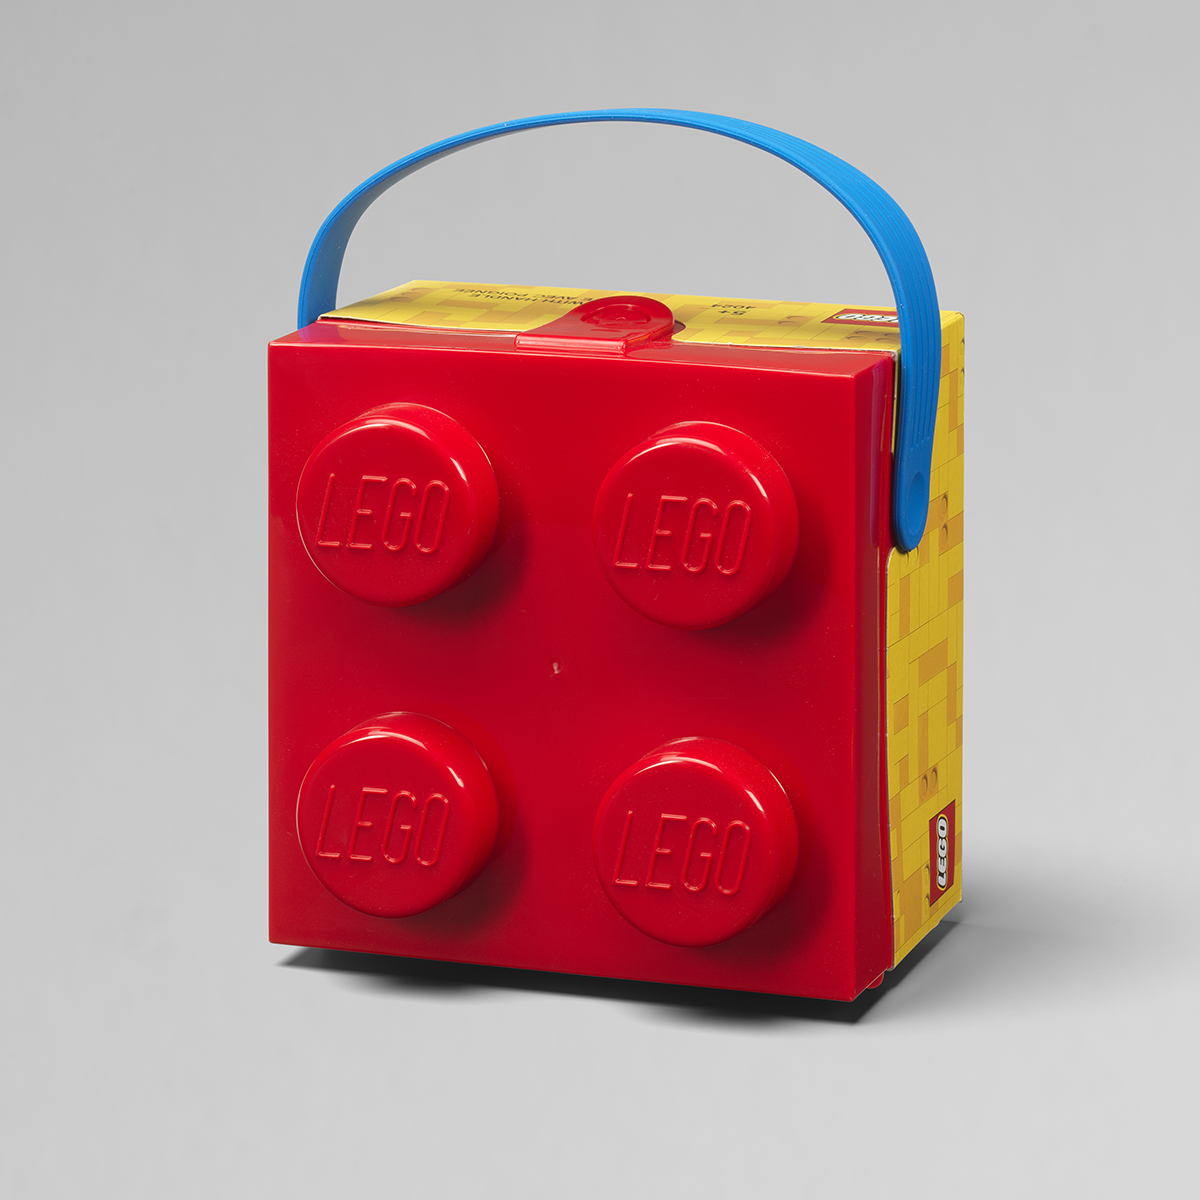 LEGO Lunch Box NINJAGO, Bright Red